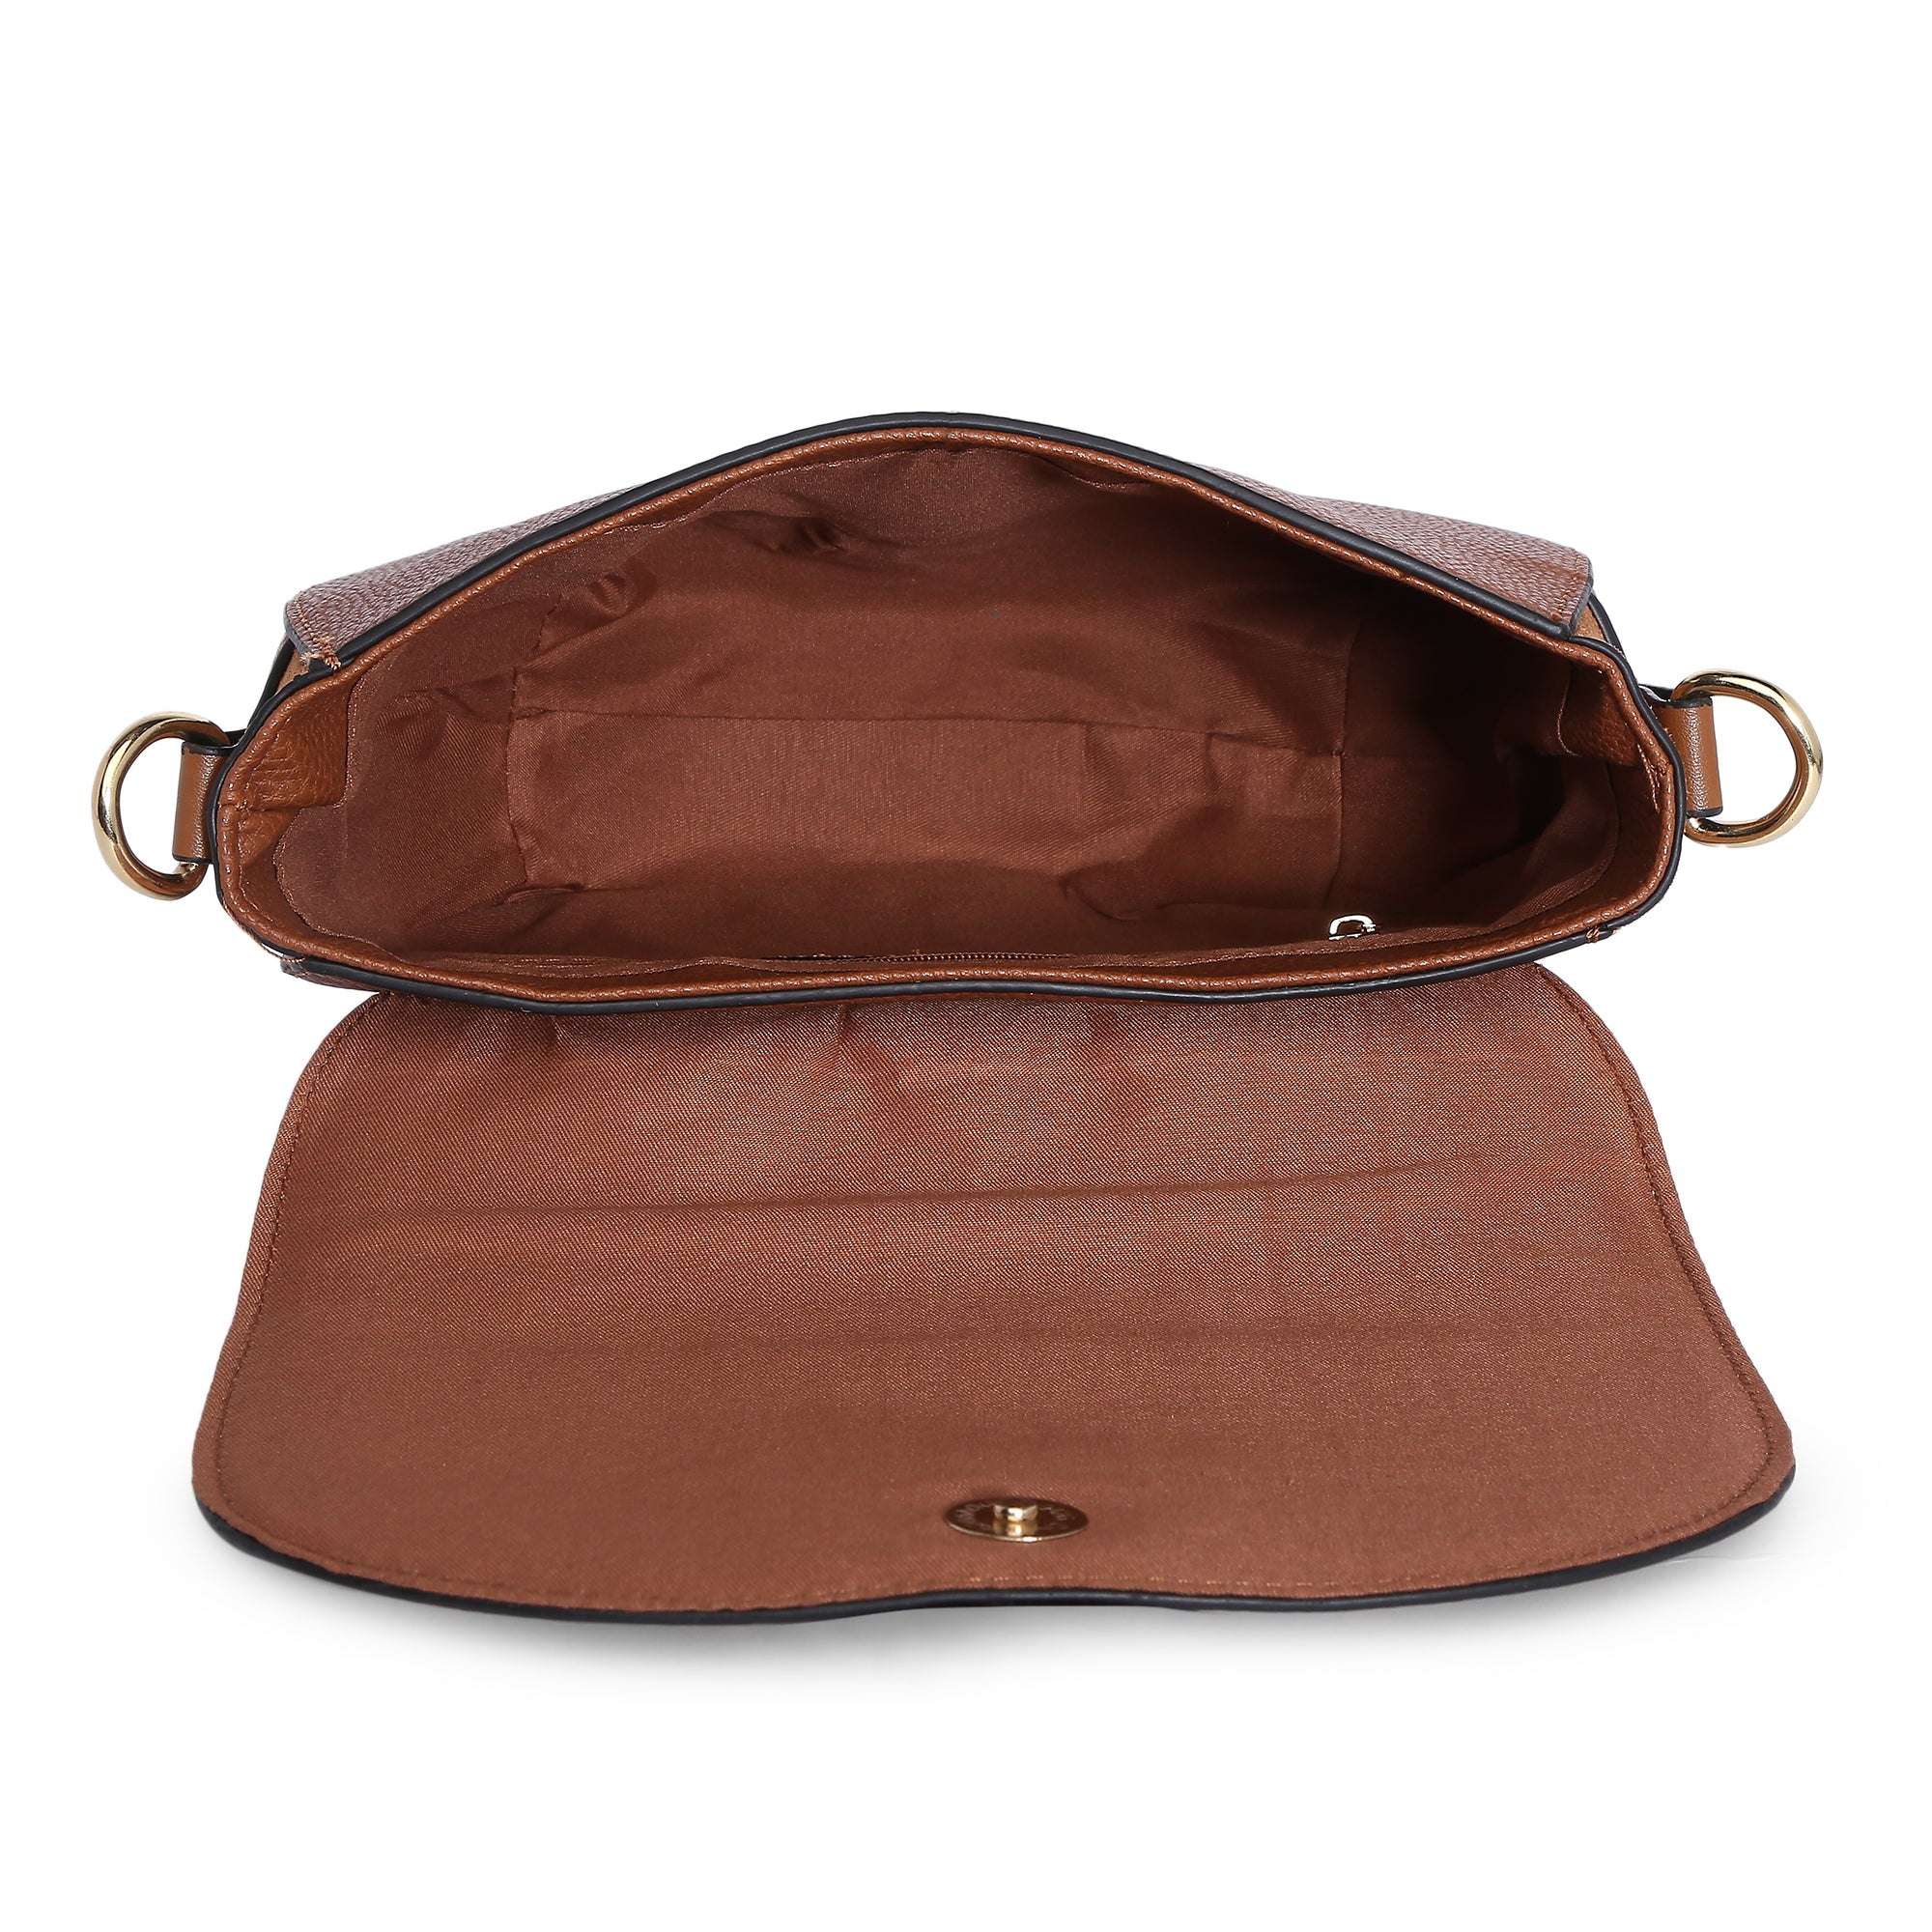 Accessorize London Women's Faux Leather Tan Nicola Saddle Sling Bag